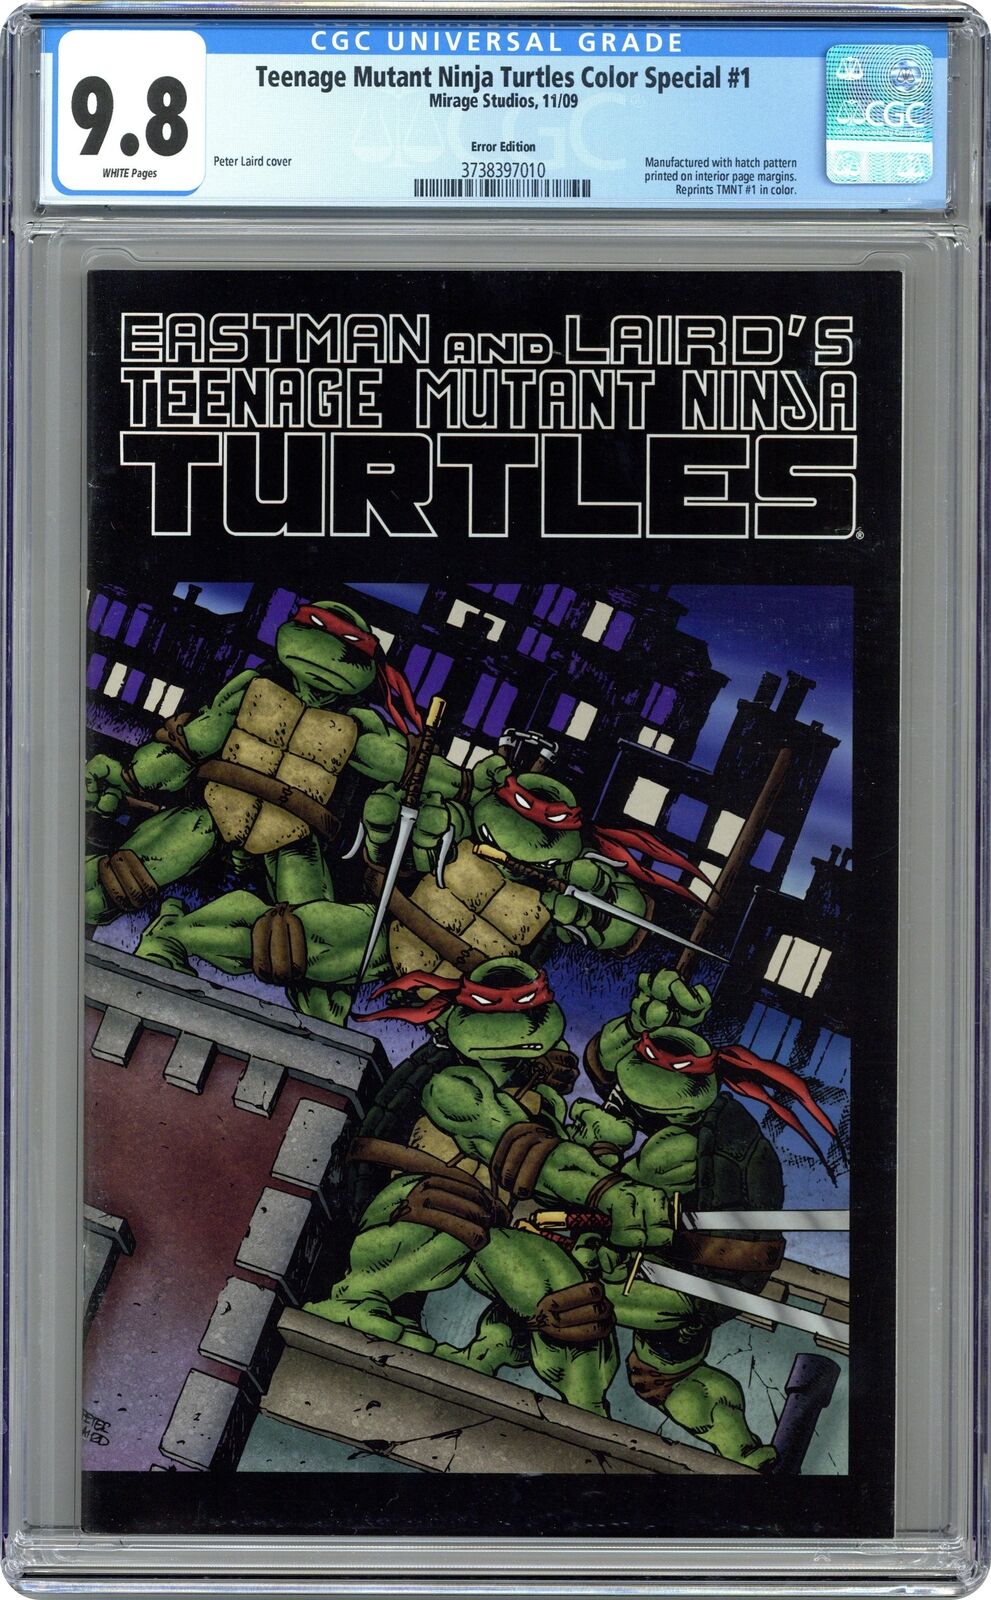 Teenage Mutant Ninja Turtles Color Special #1 Recall CGC 9.8 2009 3738397010